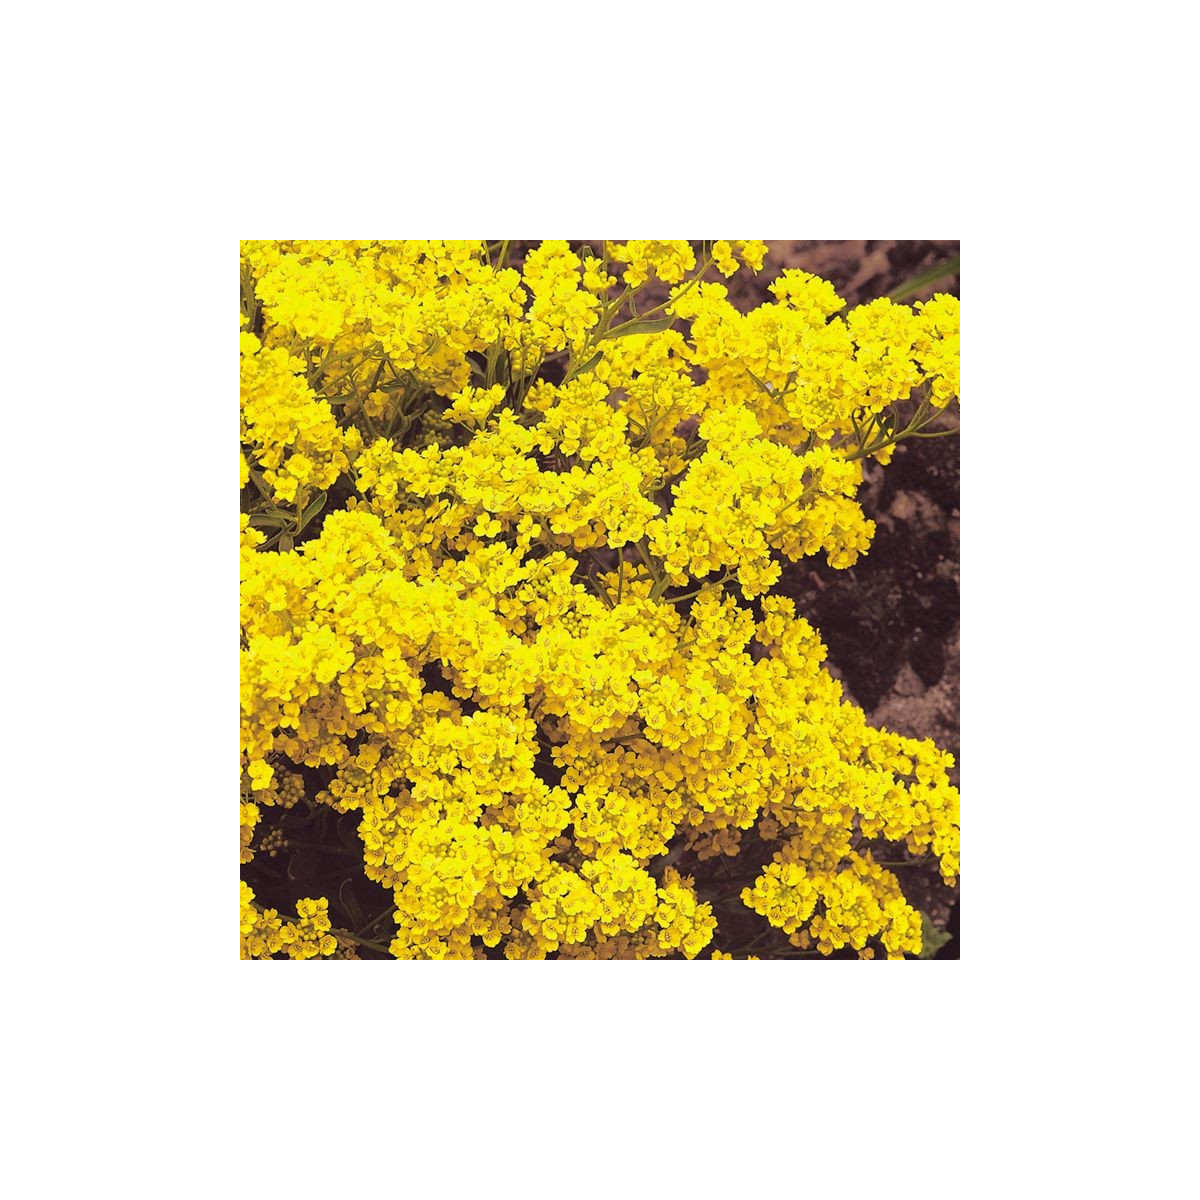 Tařice skalní - Alyssum saxatile -Gold dust - semena - 150 ks